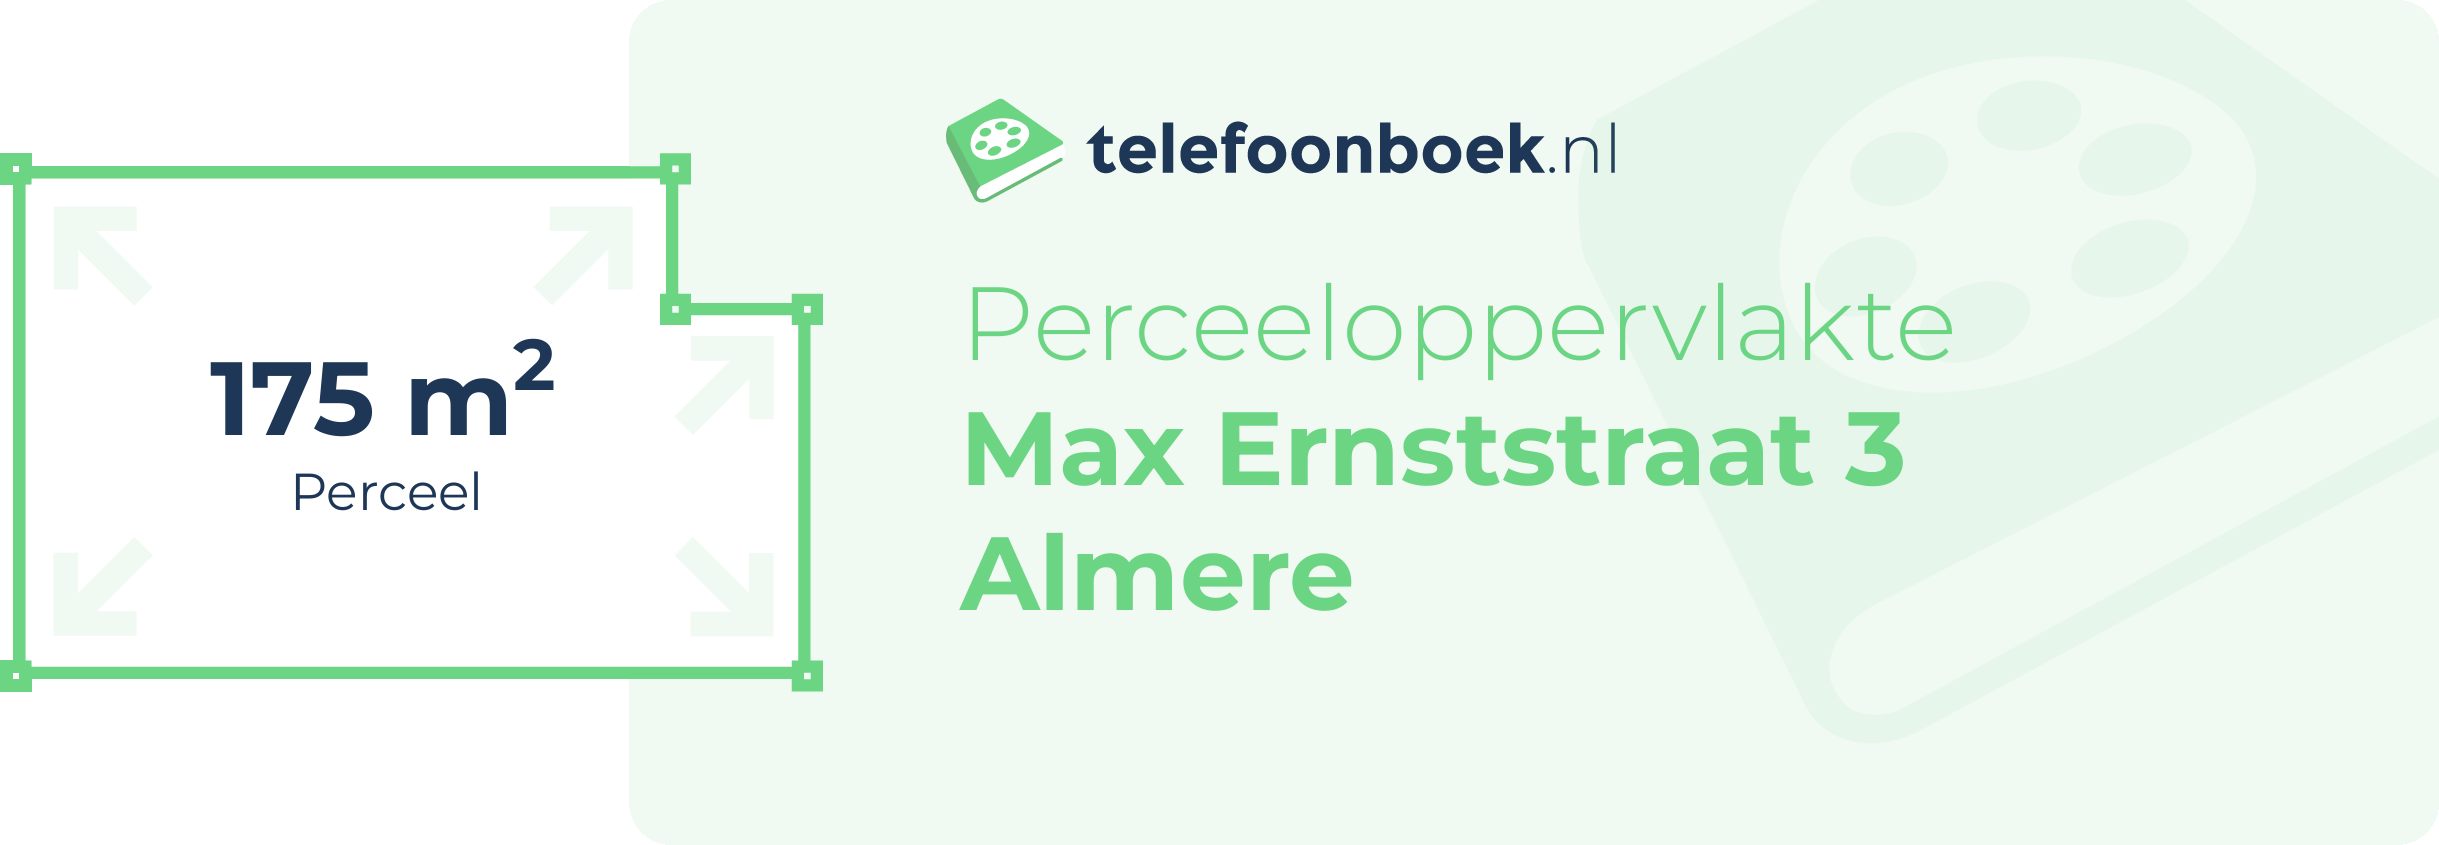 Perceeloppervlakte Max Ernststraat 3 Almere